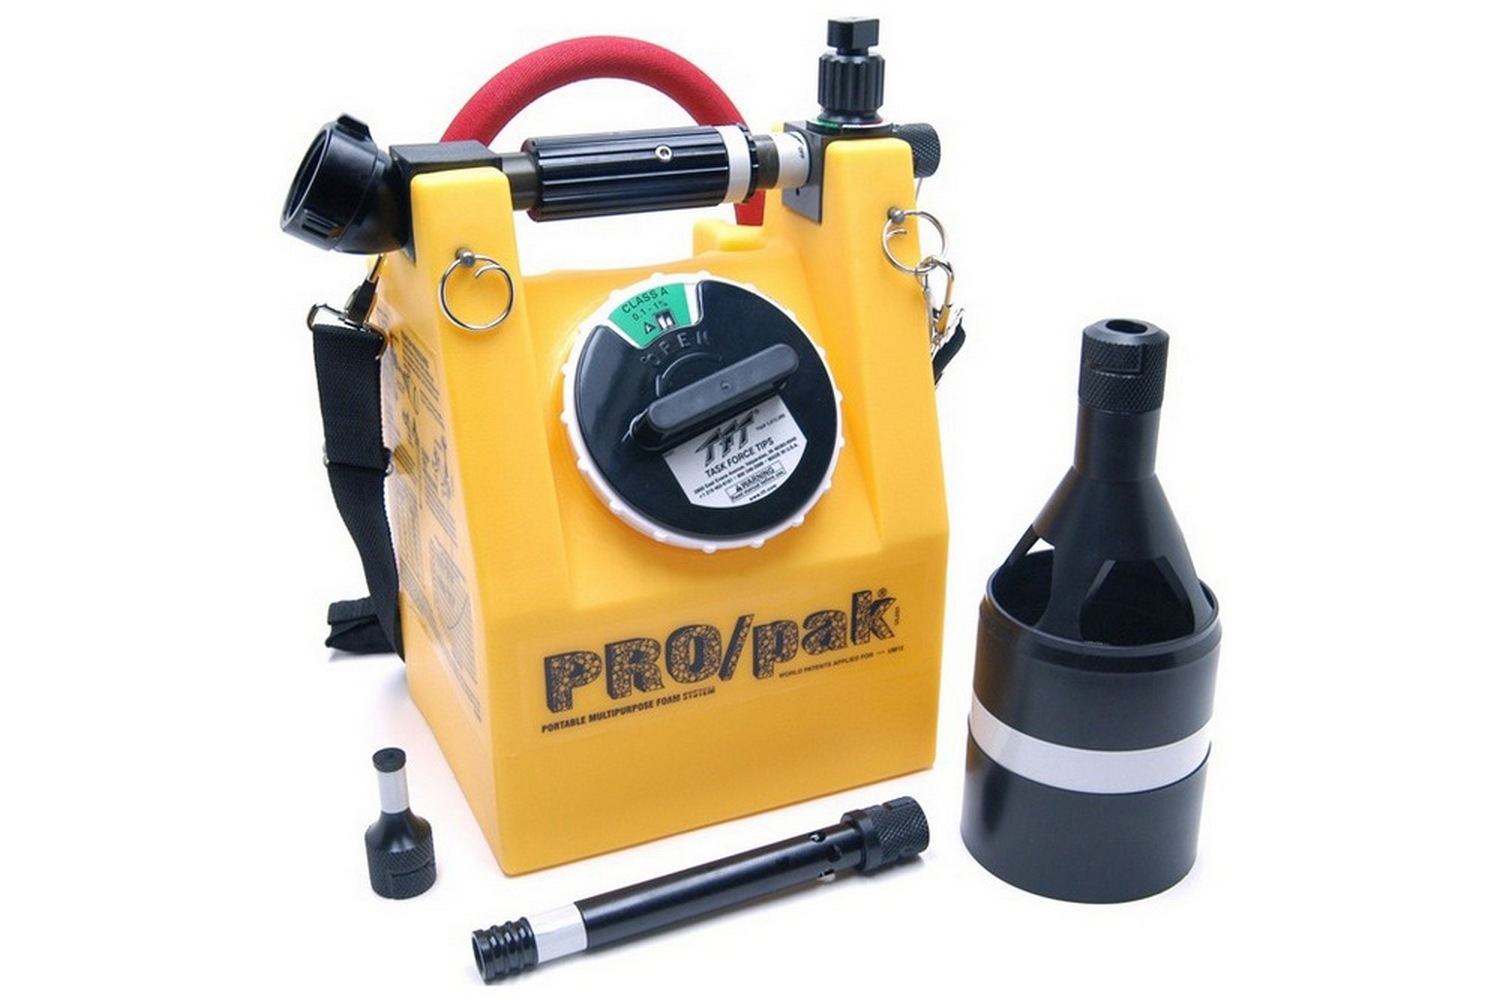 Pro/pak - Portable Foam System - Cascade Fire Equipment